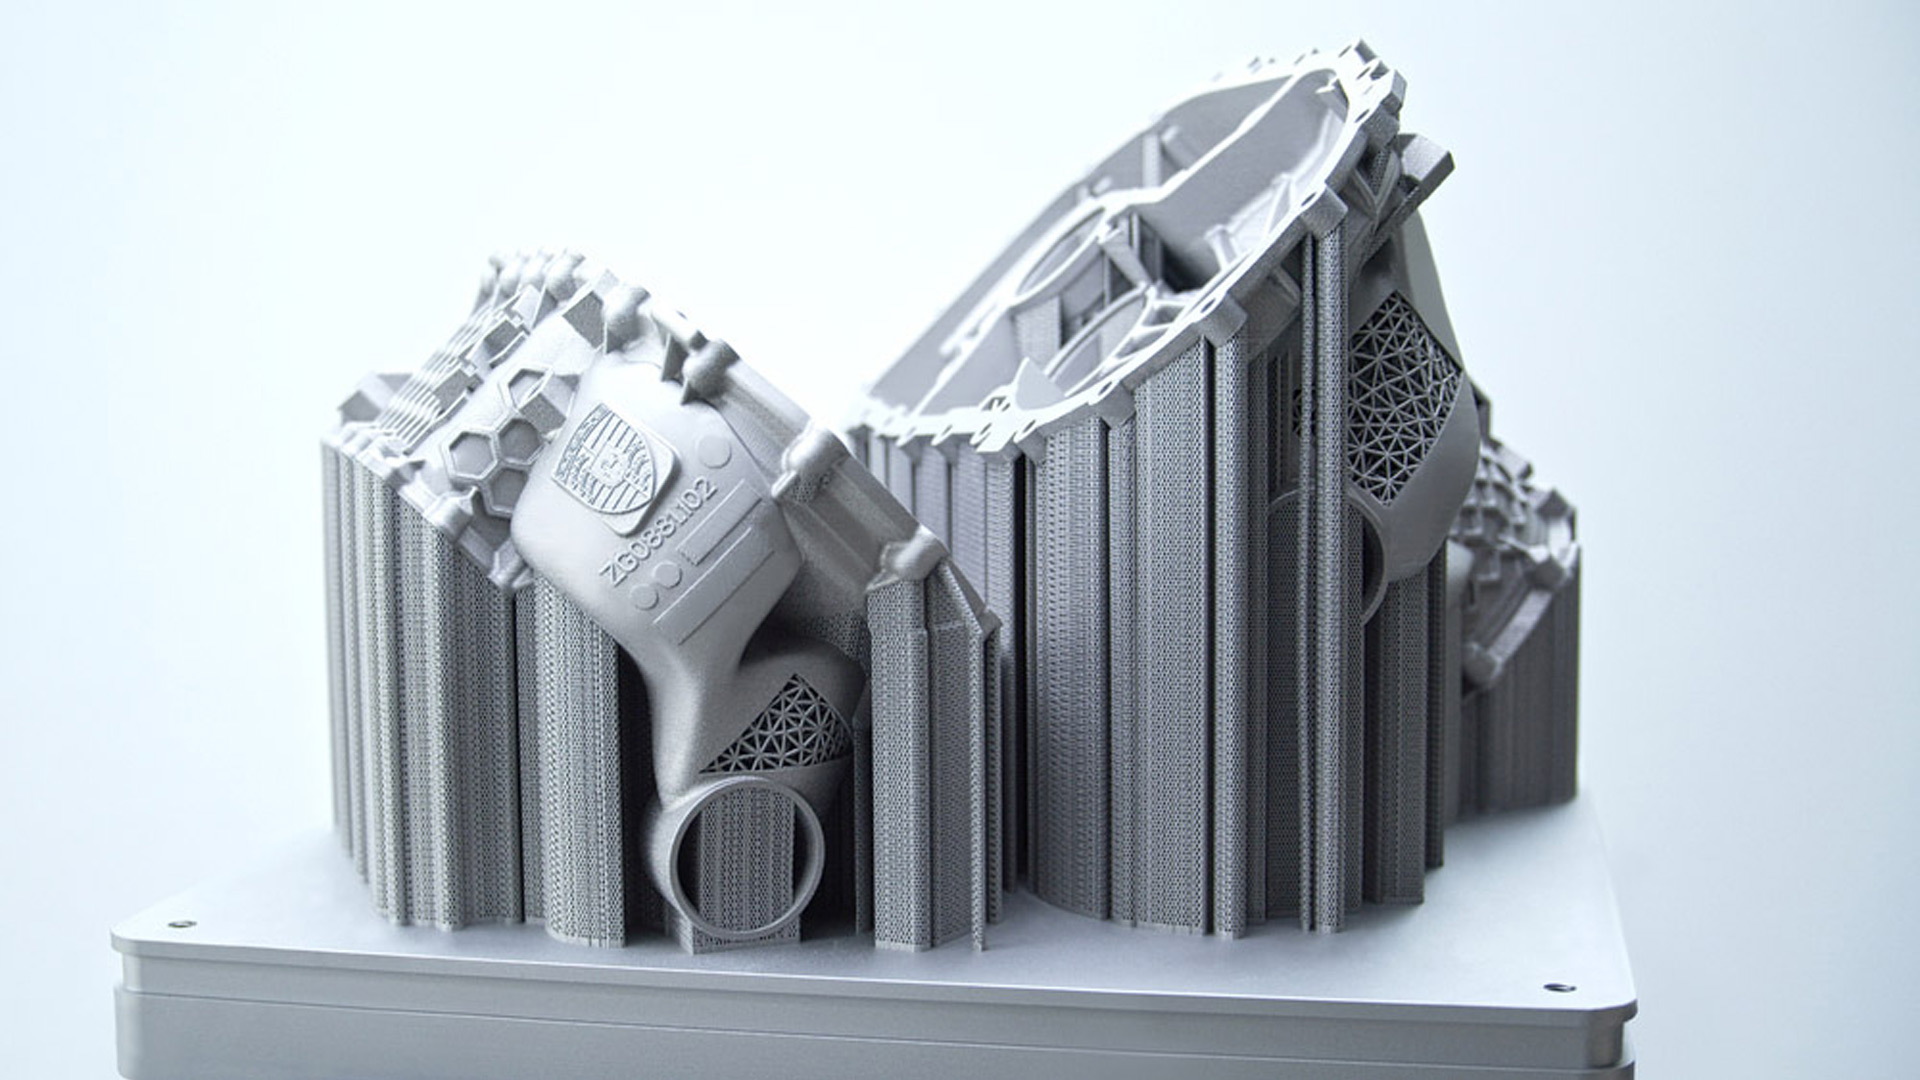 Porsche's 3D-printed electric drive housing prototype